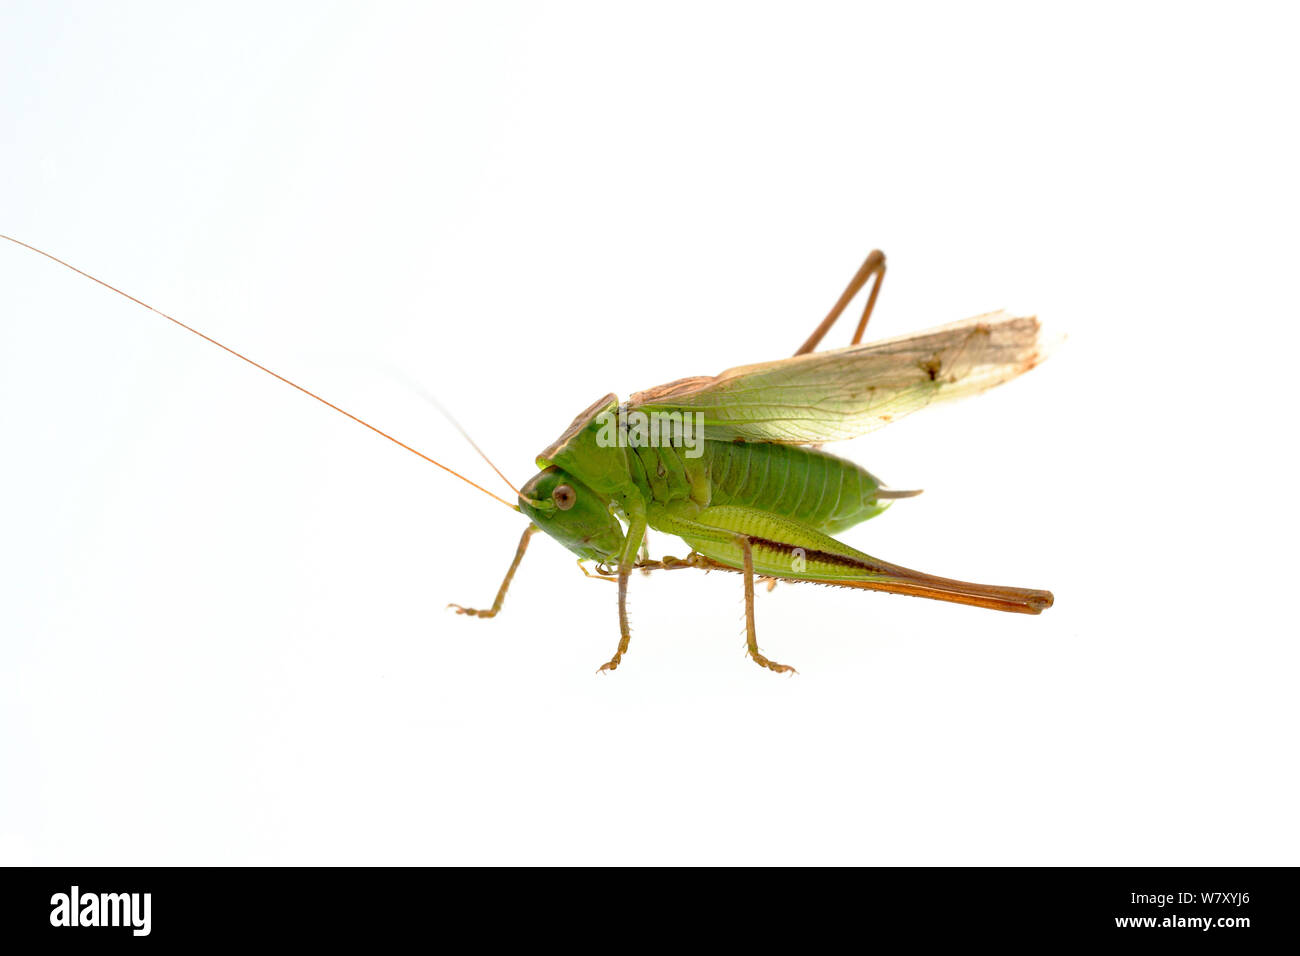 Bush-cricket (Metrioptera bicolor), Quirnheim, Rhineland-Palatinate, Germany, August. meetyourneighbours.net project Stock Photo